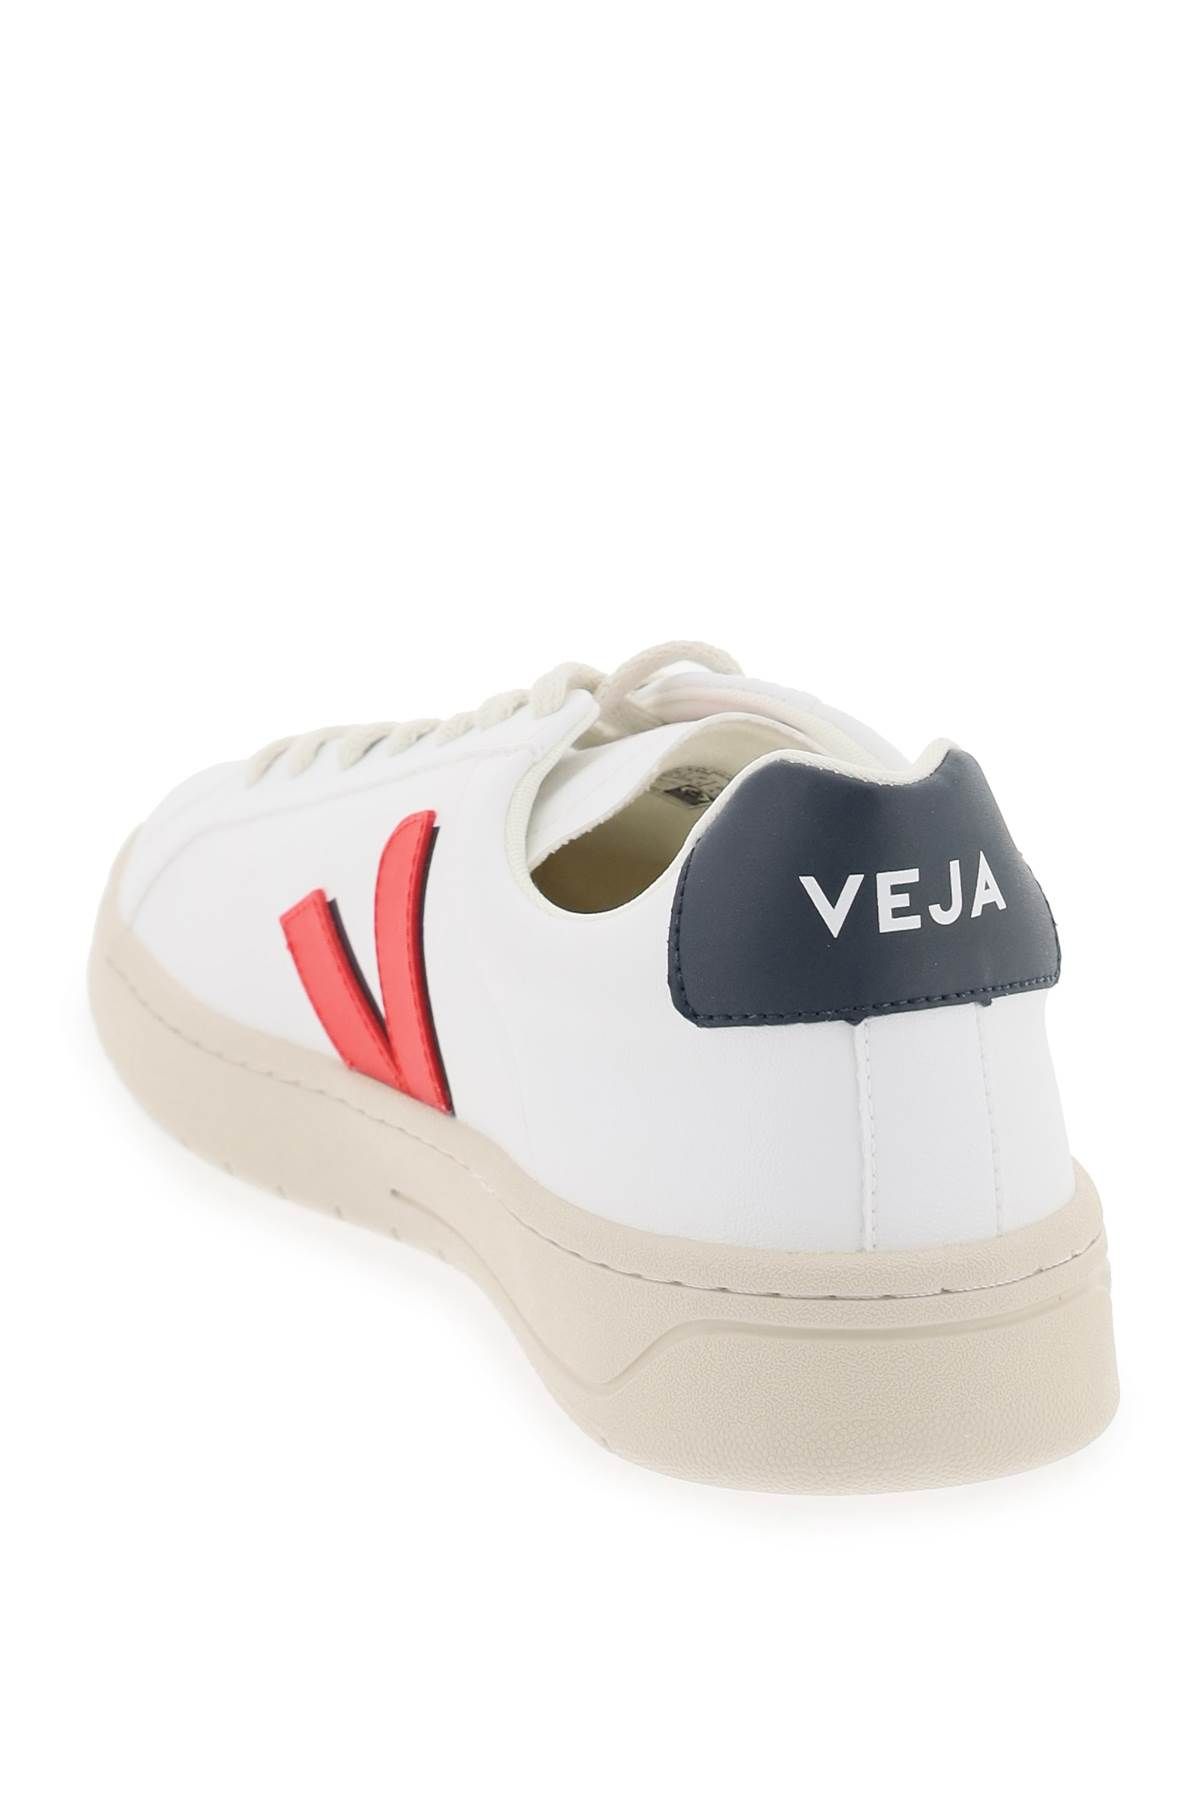 Shop Veja C.w.l. Urca Vegan Sneakers In White,red,blue